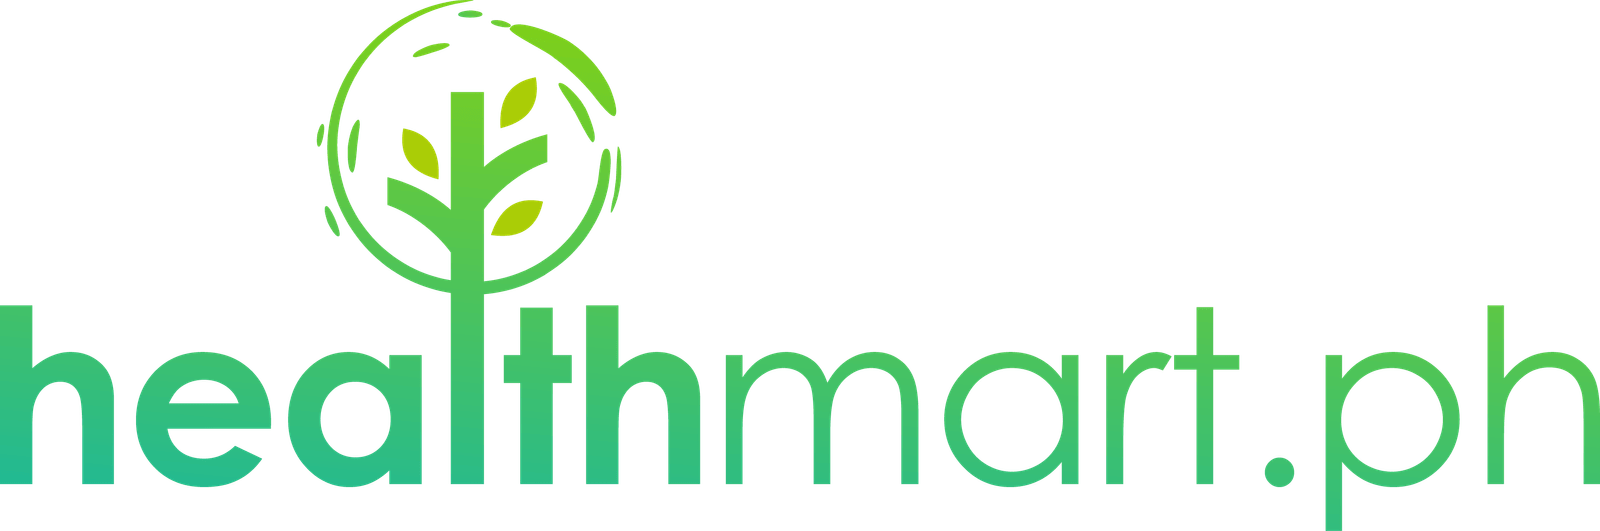 Healthmart | Sleepasil Supplement